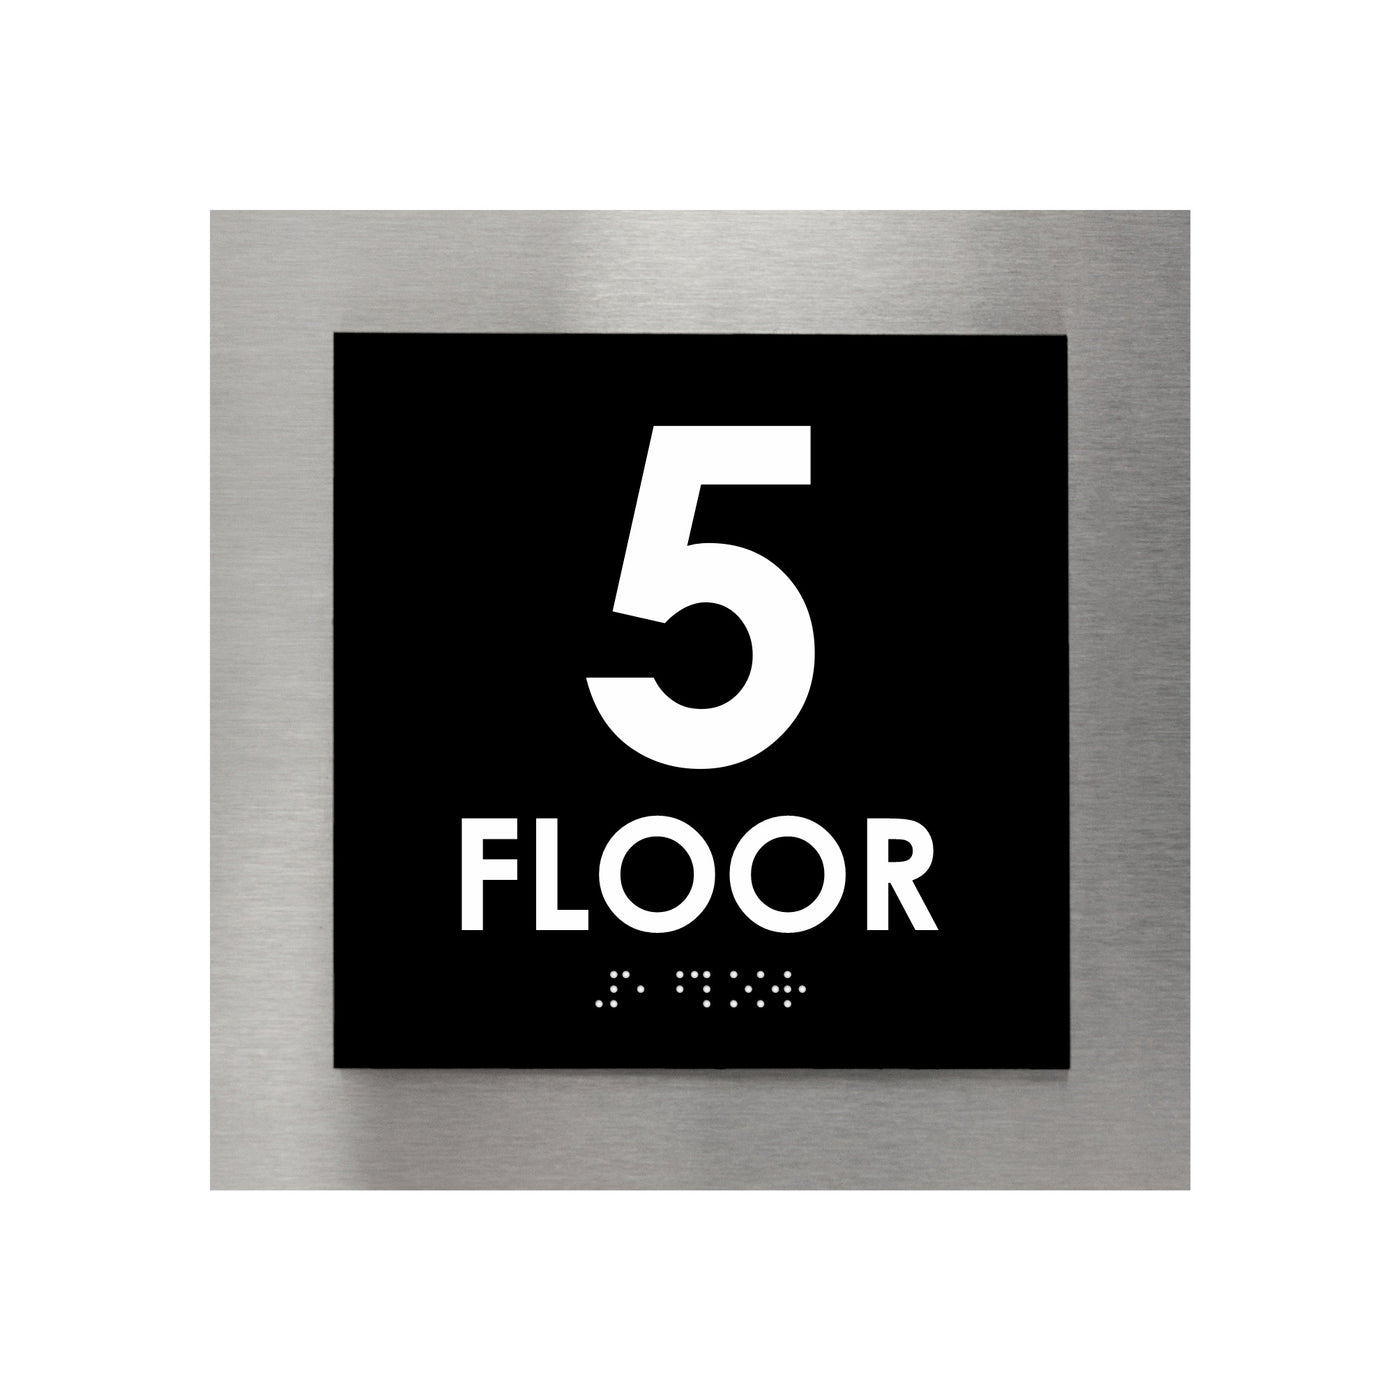 Floor Signs - Sign For 5s Floor - Interior Stainless Steel Sign - "Modern" Design